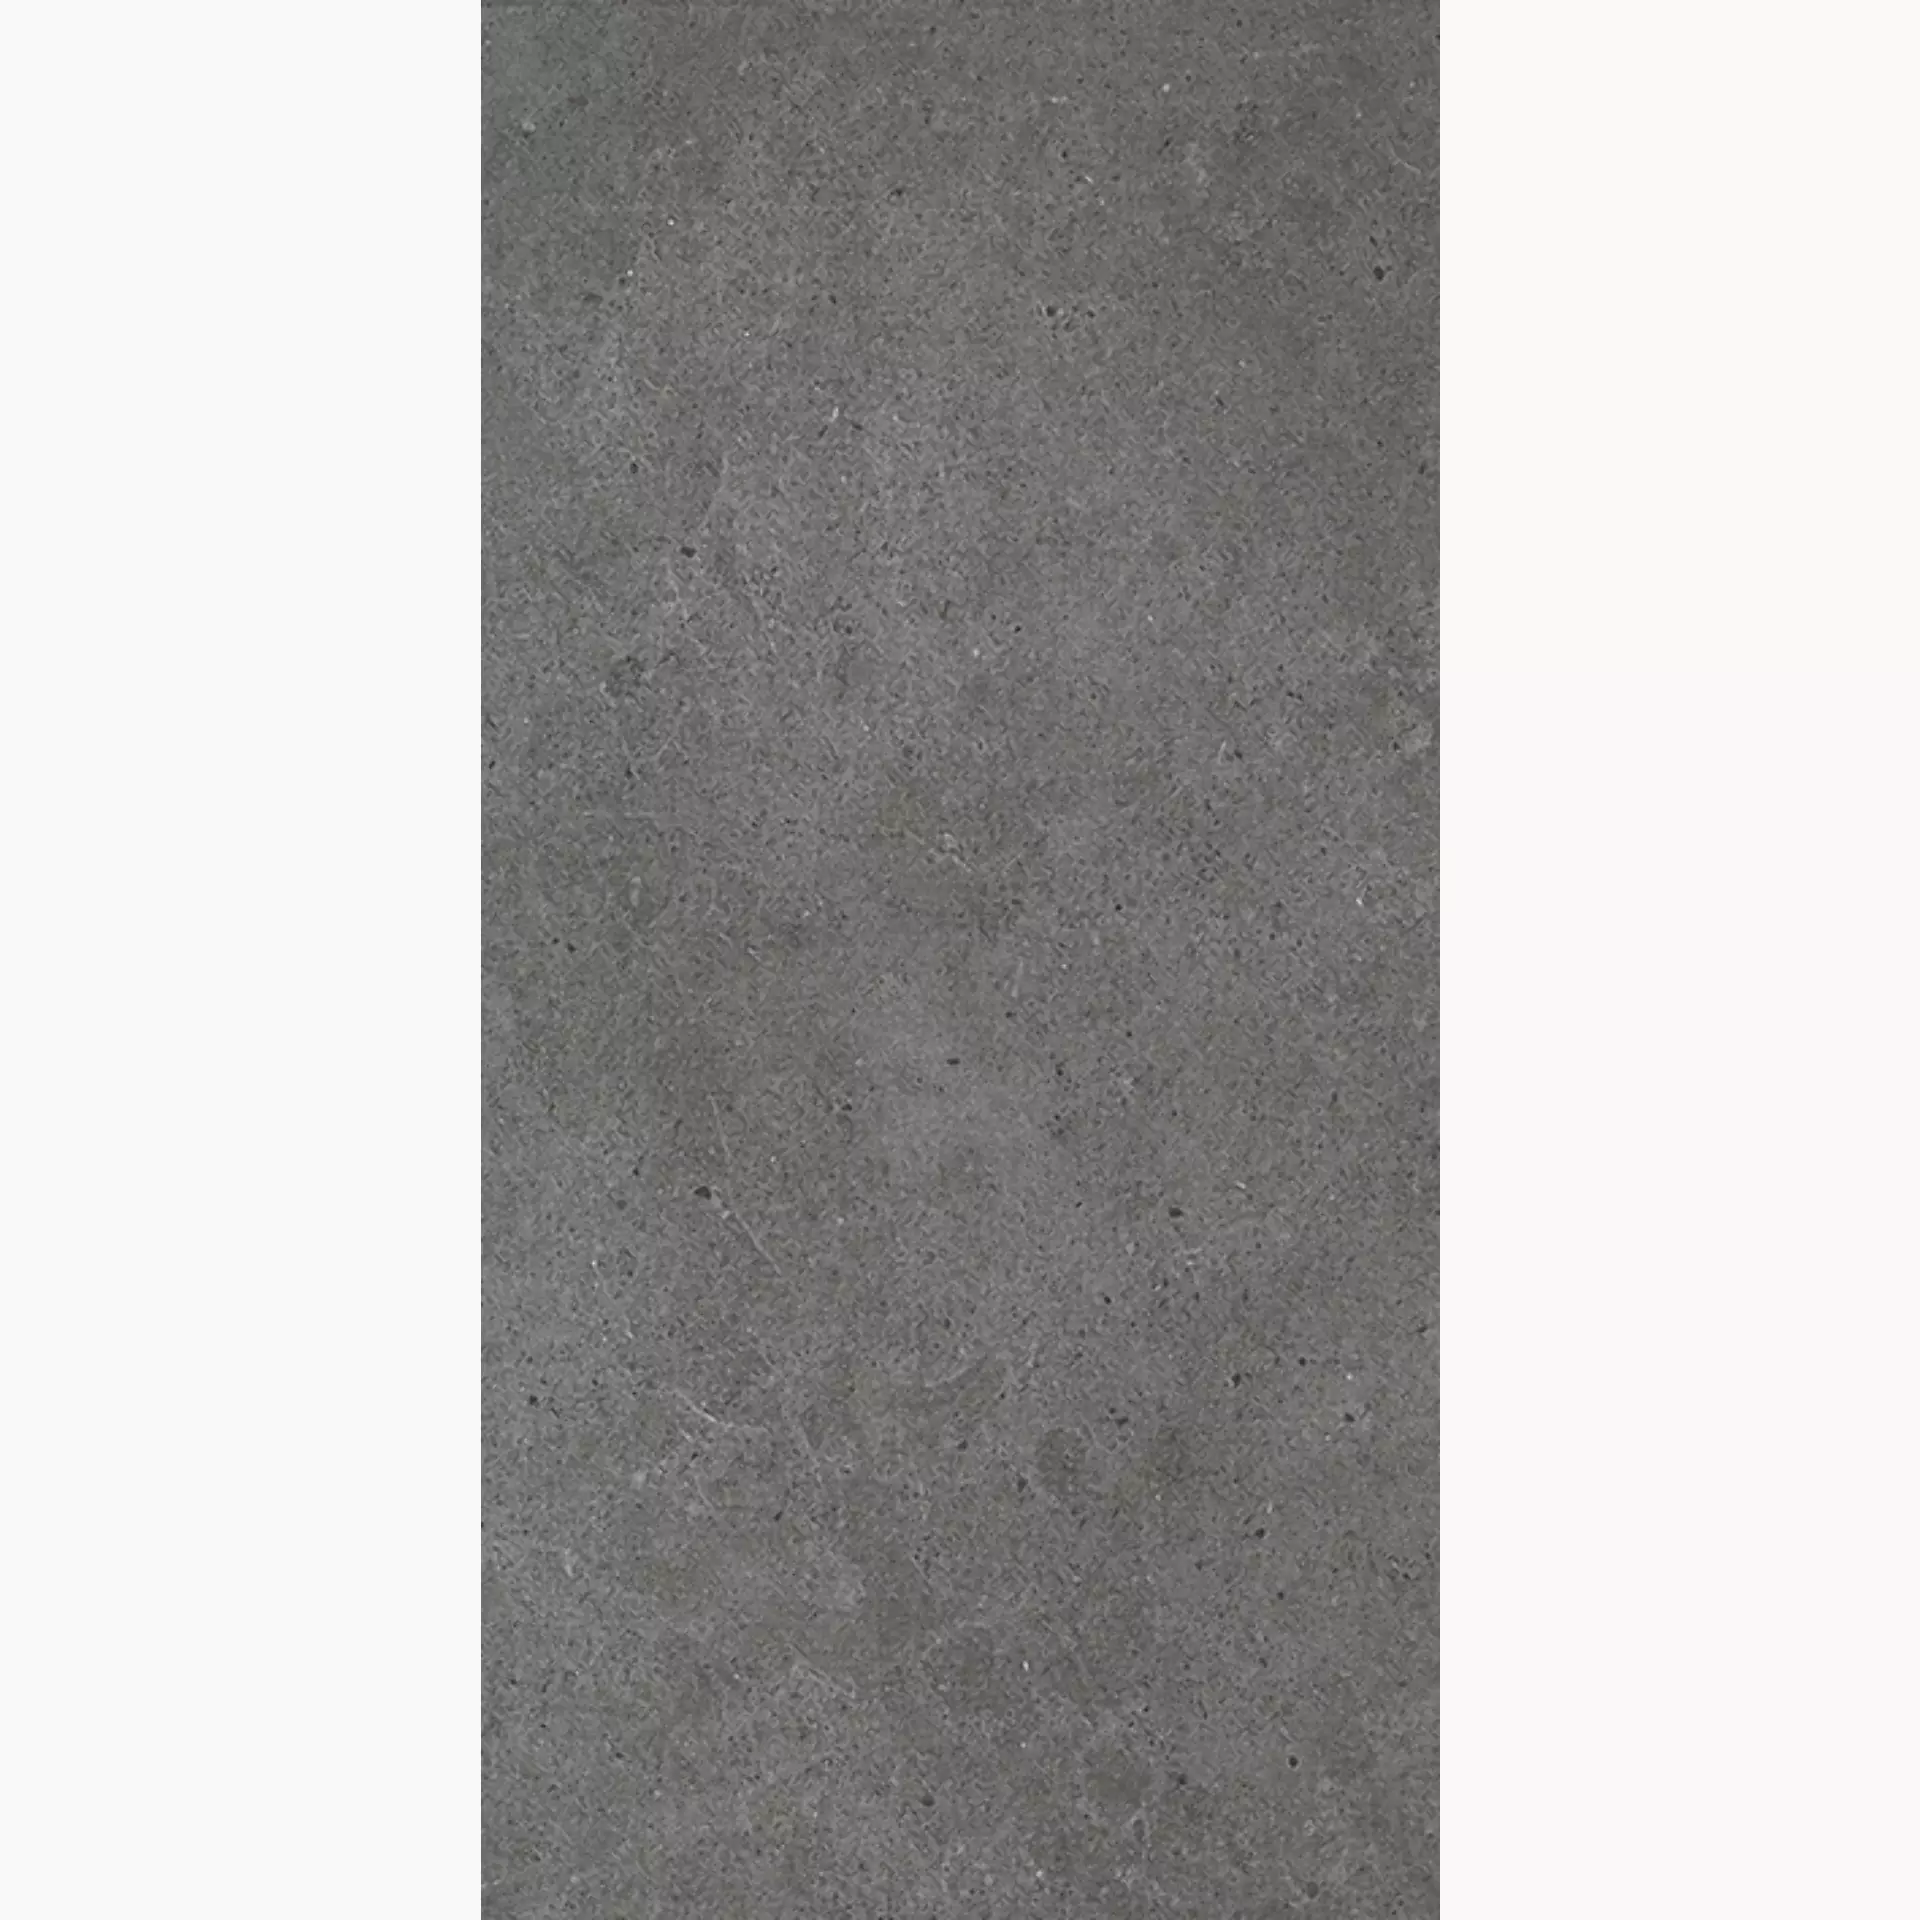 Villeroy & Boch Solid Tones Dark Concrete Matt 2685-PC62 30x60cm rectified 10mm